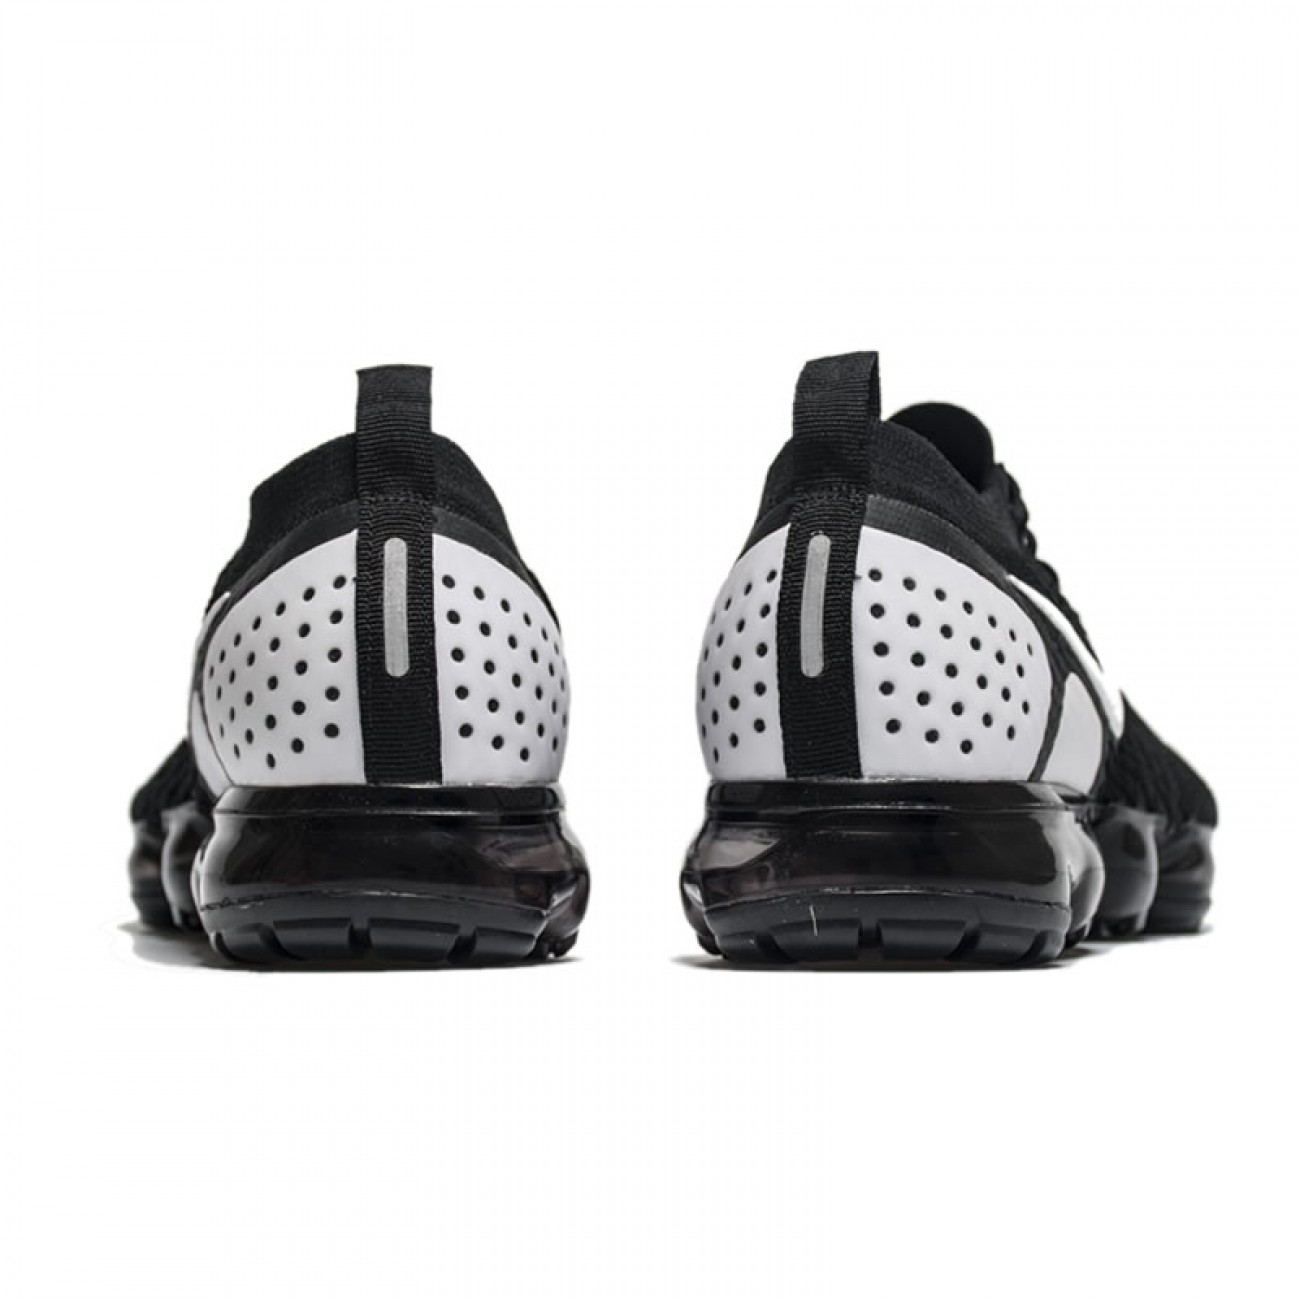 Nike Air VaporMax Flyknit 2.0 Black/White Mens Womens Running Shoes 942842-010